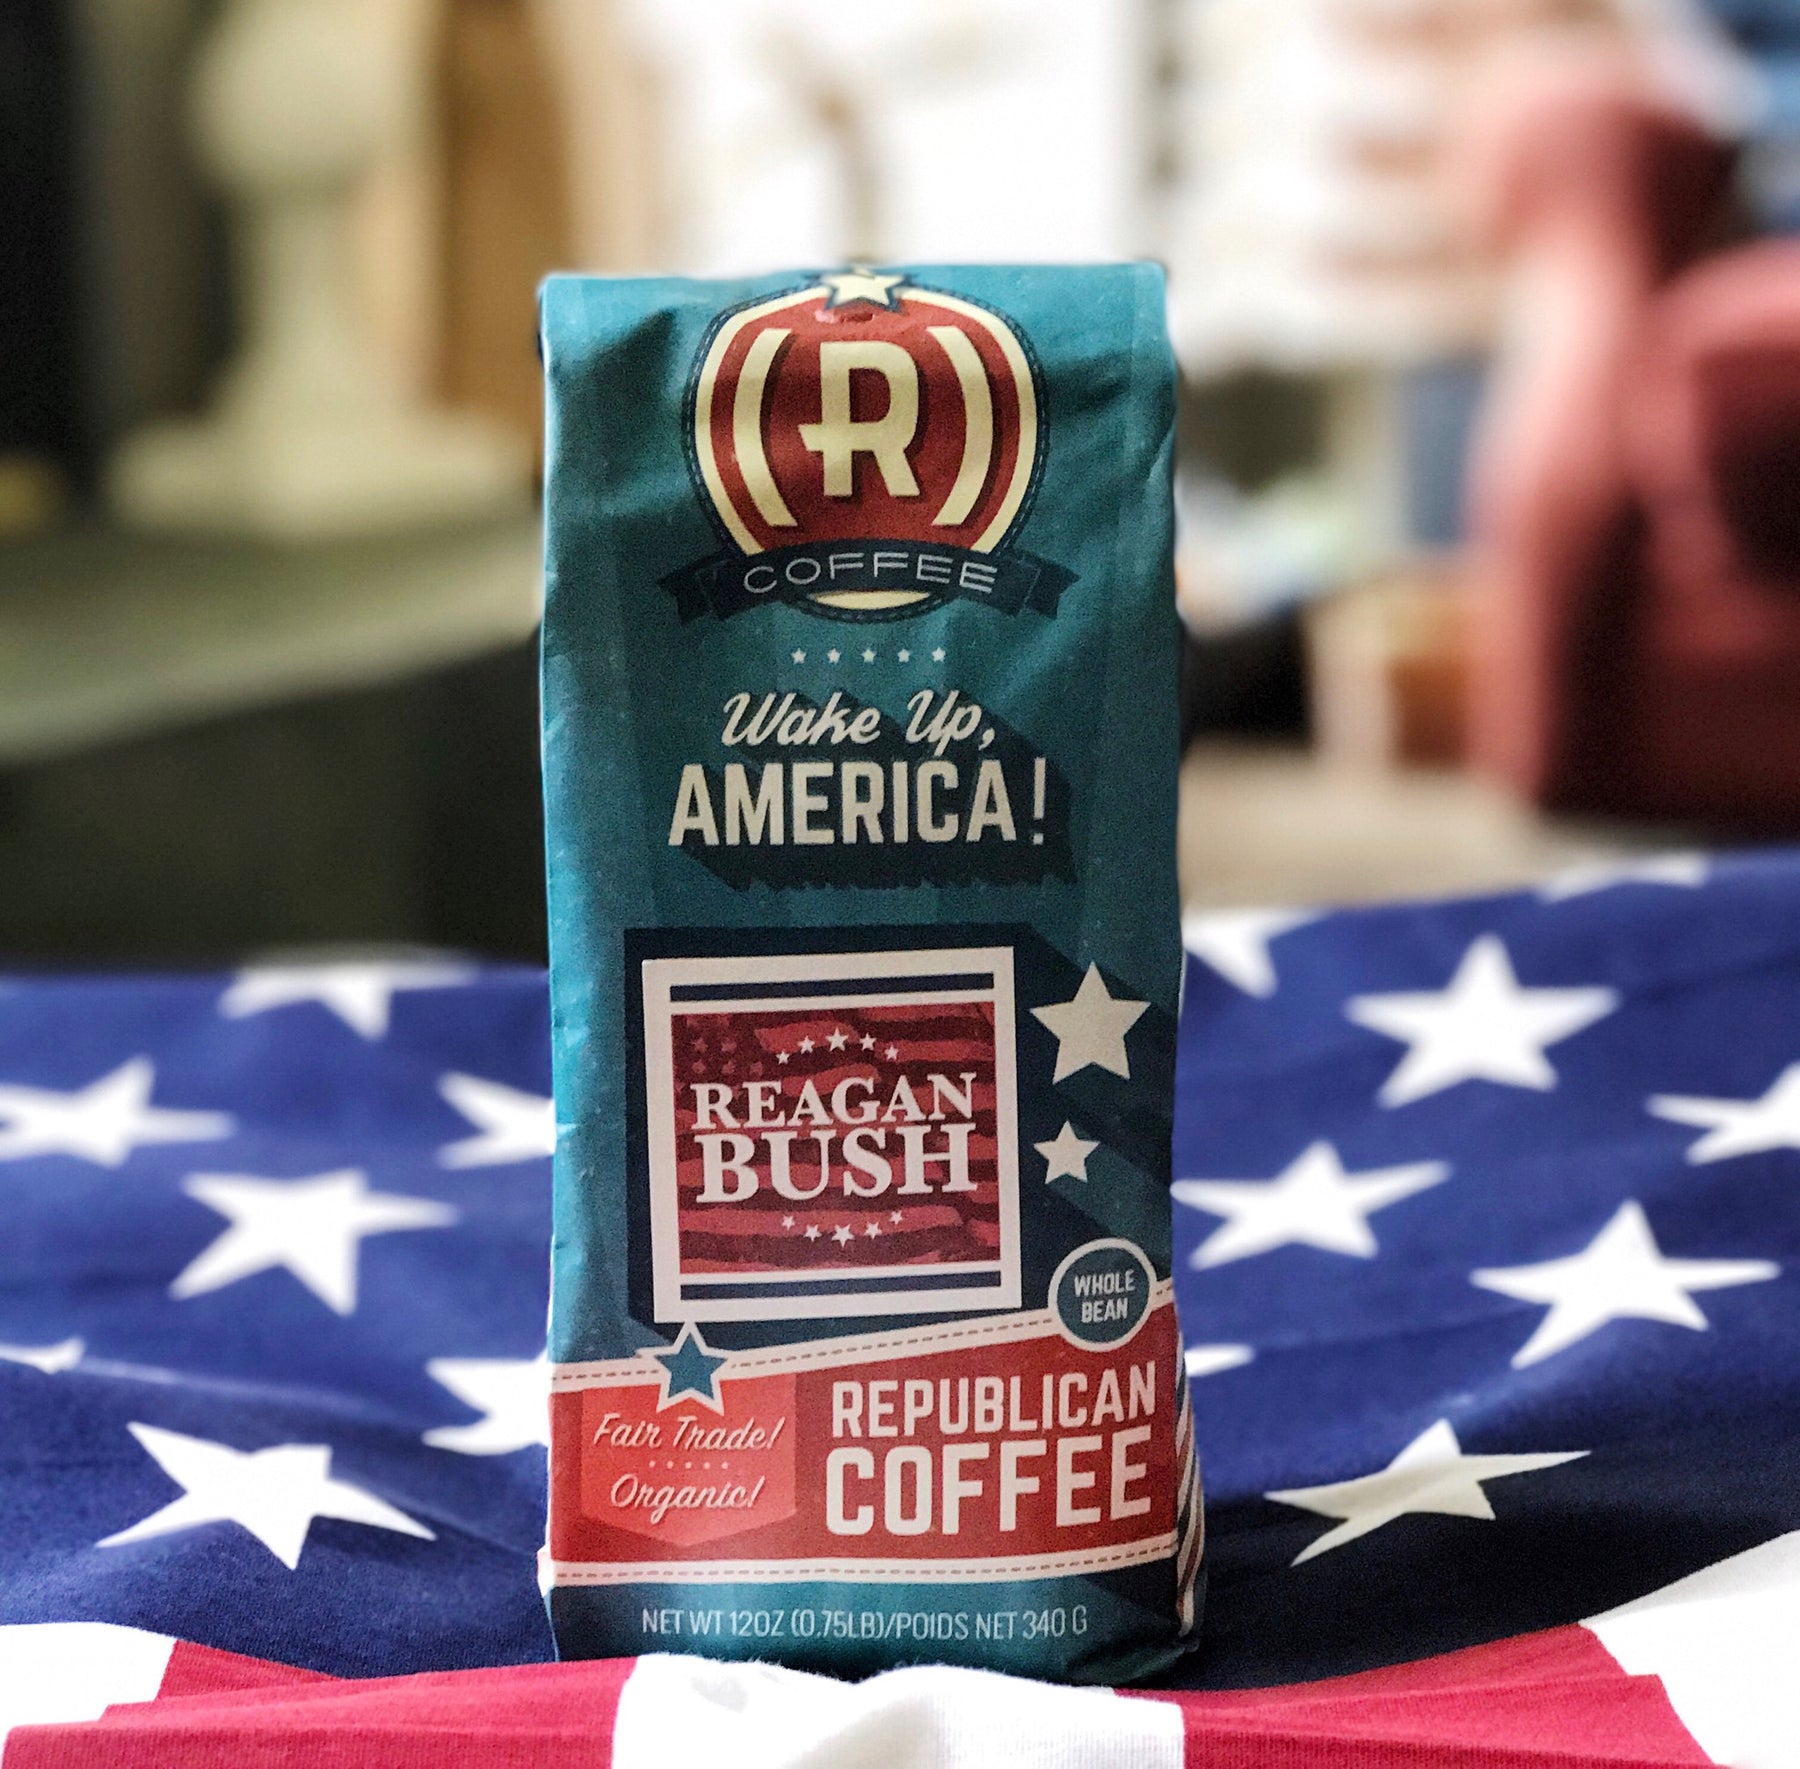 The Patriot (Coffee + Mug) - Whole Bean / Reagan-Bush - Bundle - Republican Coffee - 13